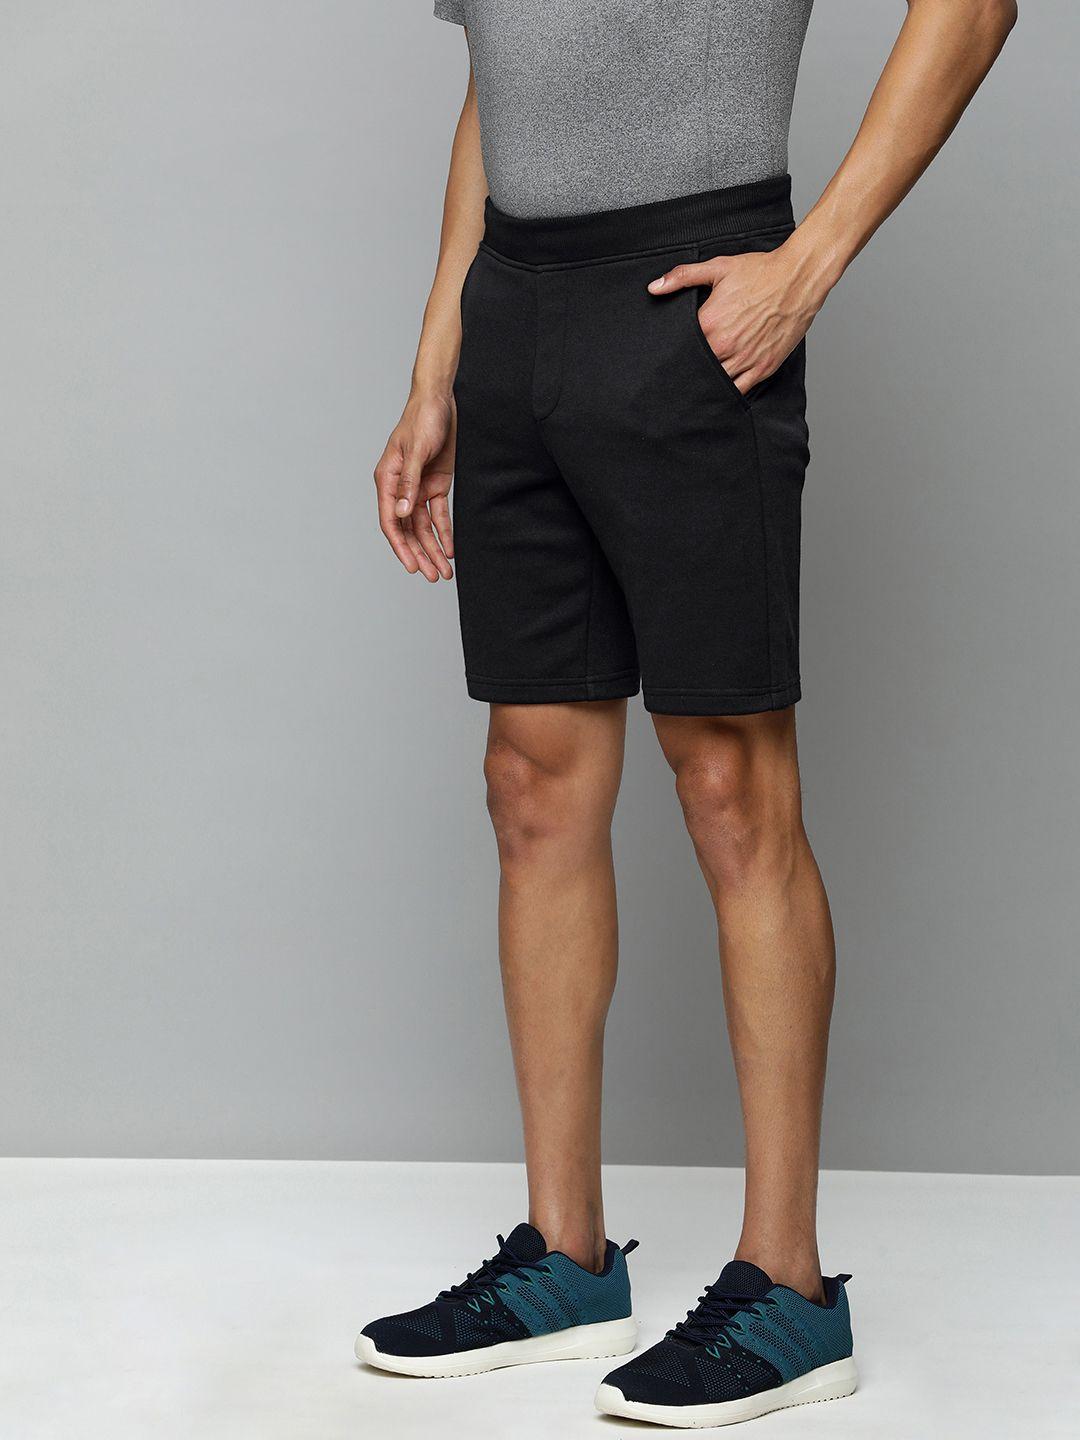 skechers men black sports shorts with e-dry technology technology